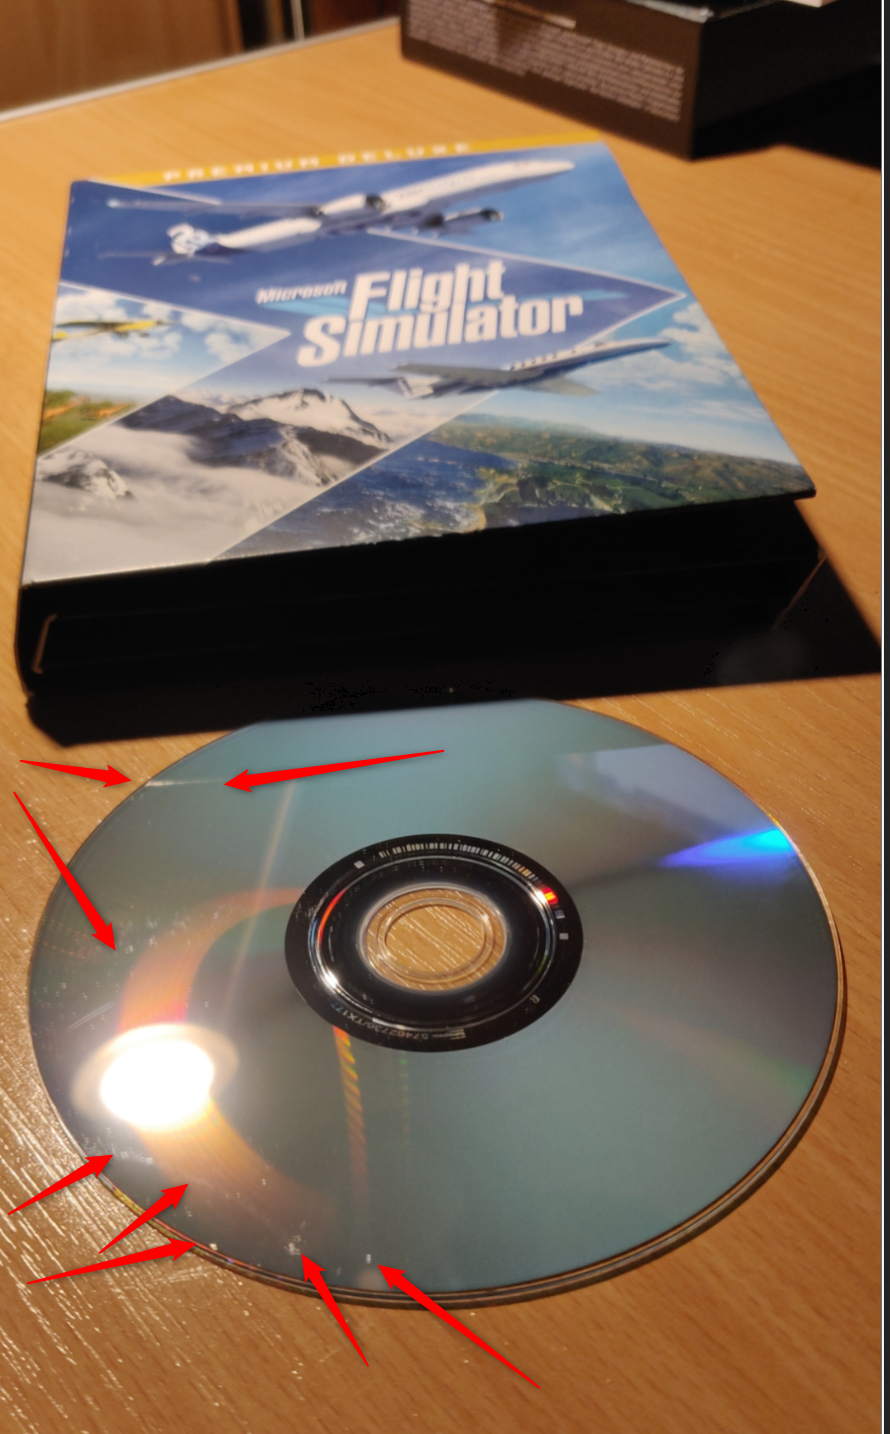 Microsoft Flight Simulator 2020 Premium Deluxe PC DVD NEW IN STOCK!